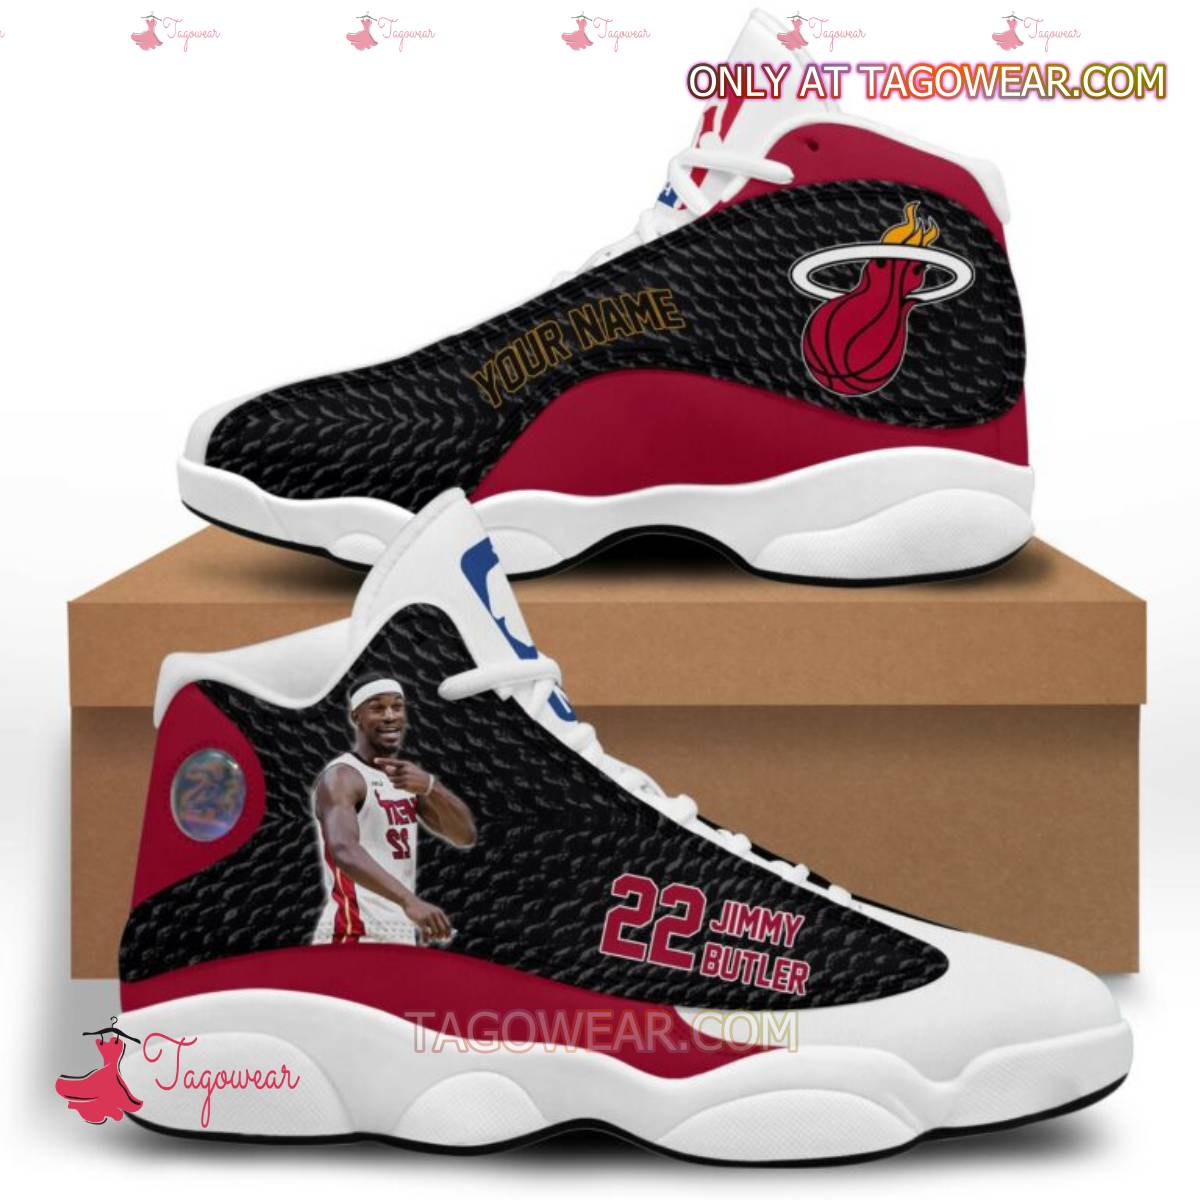 Nba Jimmy Butler Miami Heat Personalized Air Jordan 13 Shoes